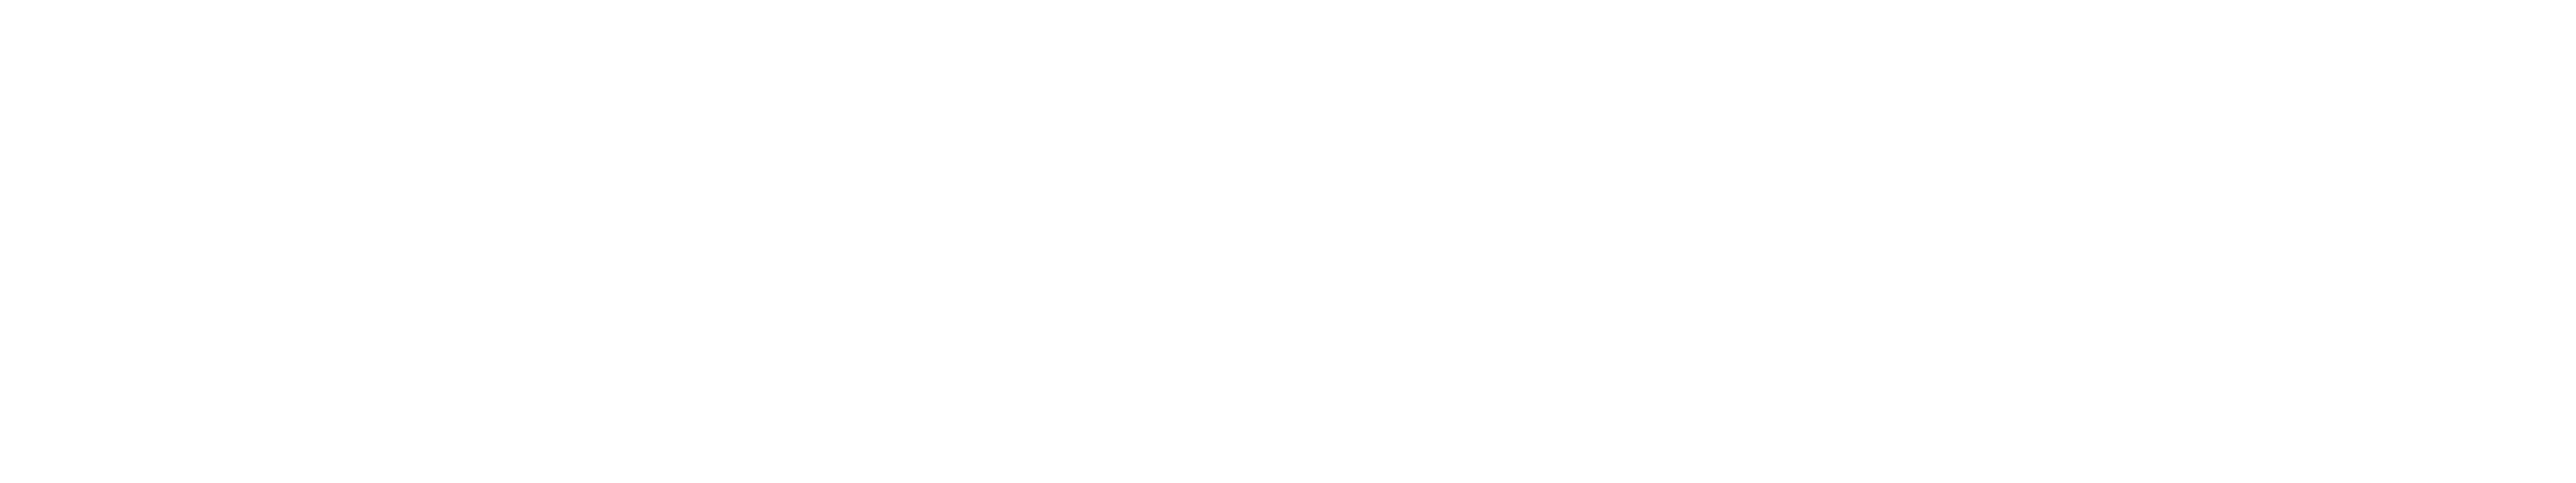 Victor Perez's NUKE™ Compositing Master Class